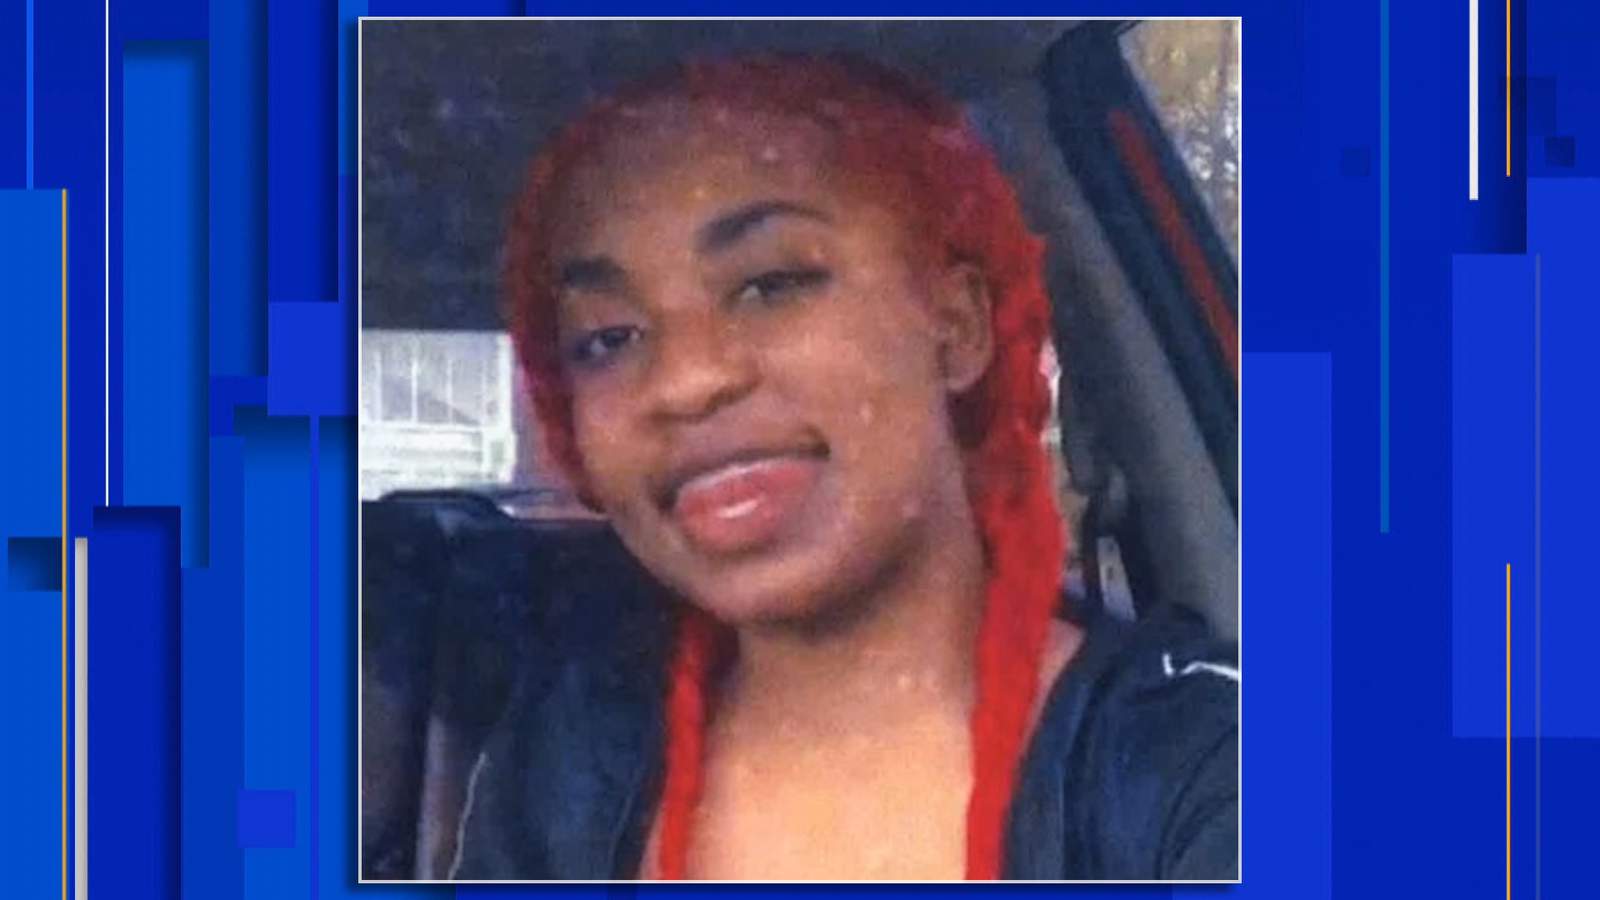 Detroit police seek missing 15-year-old girl last seen Oct. 30